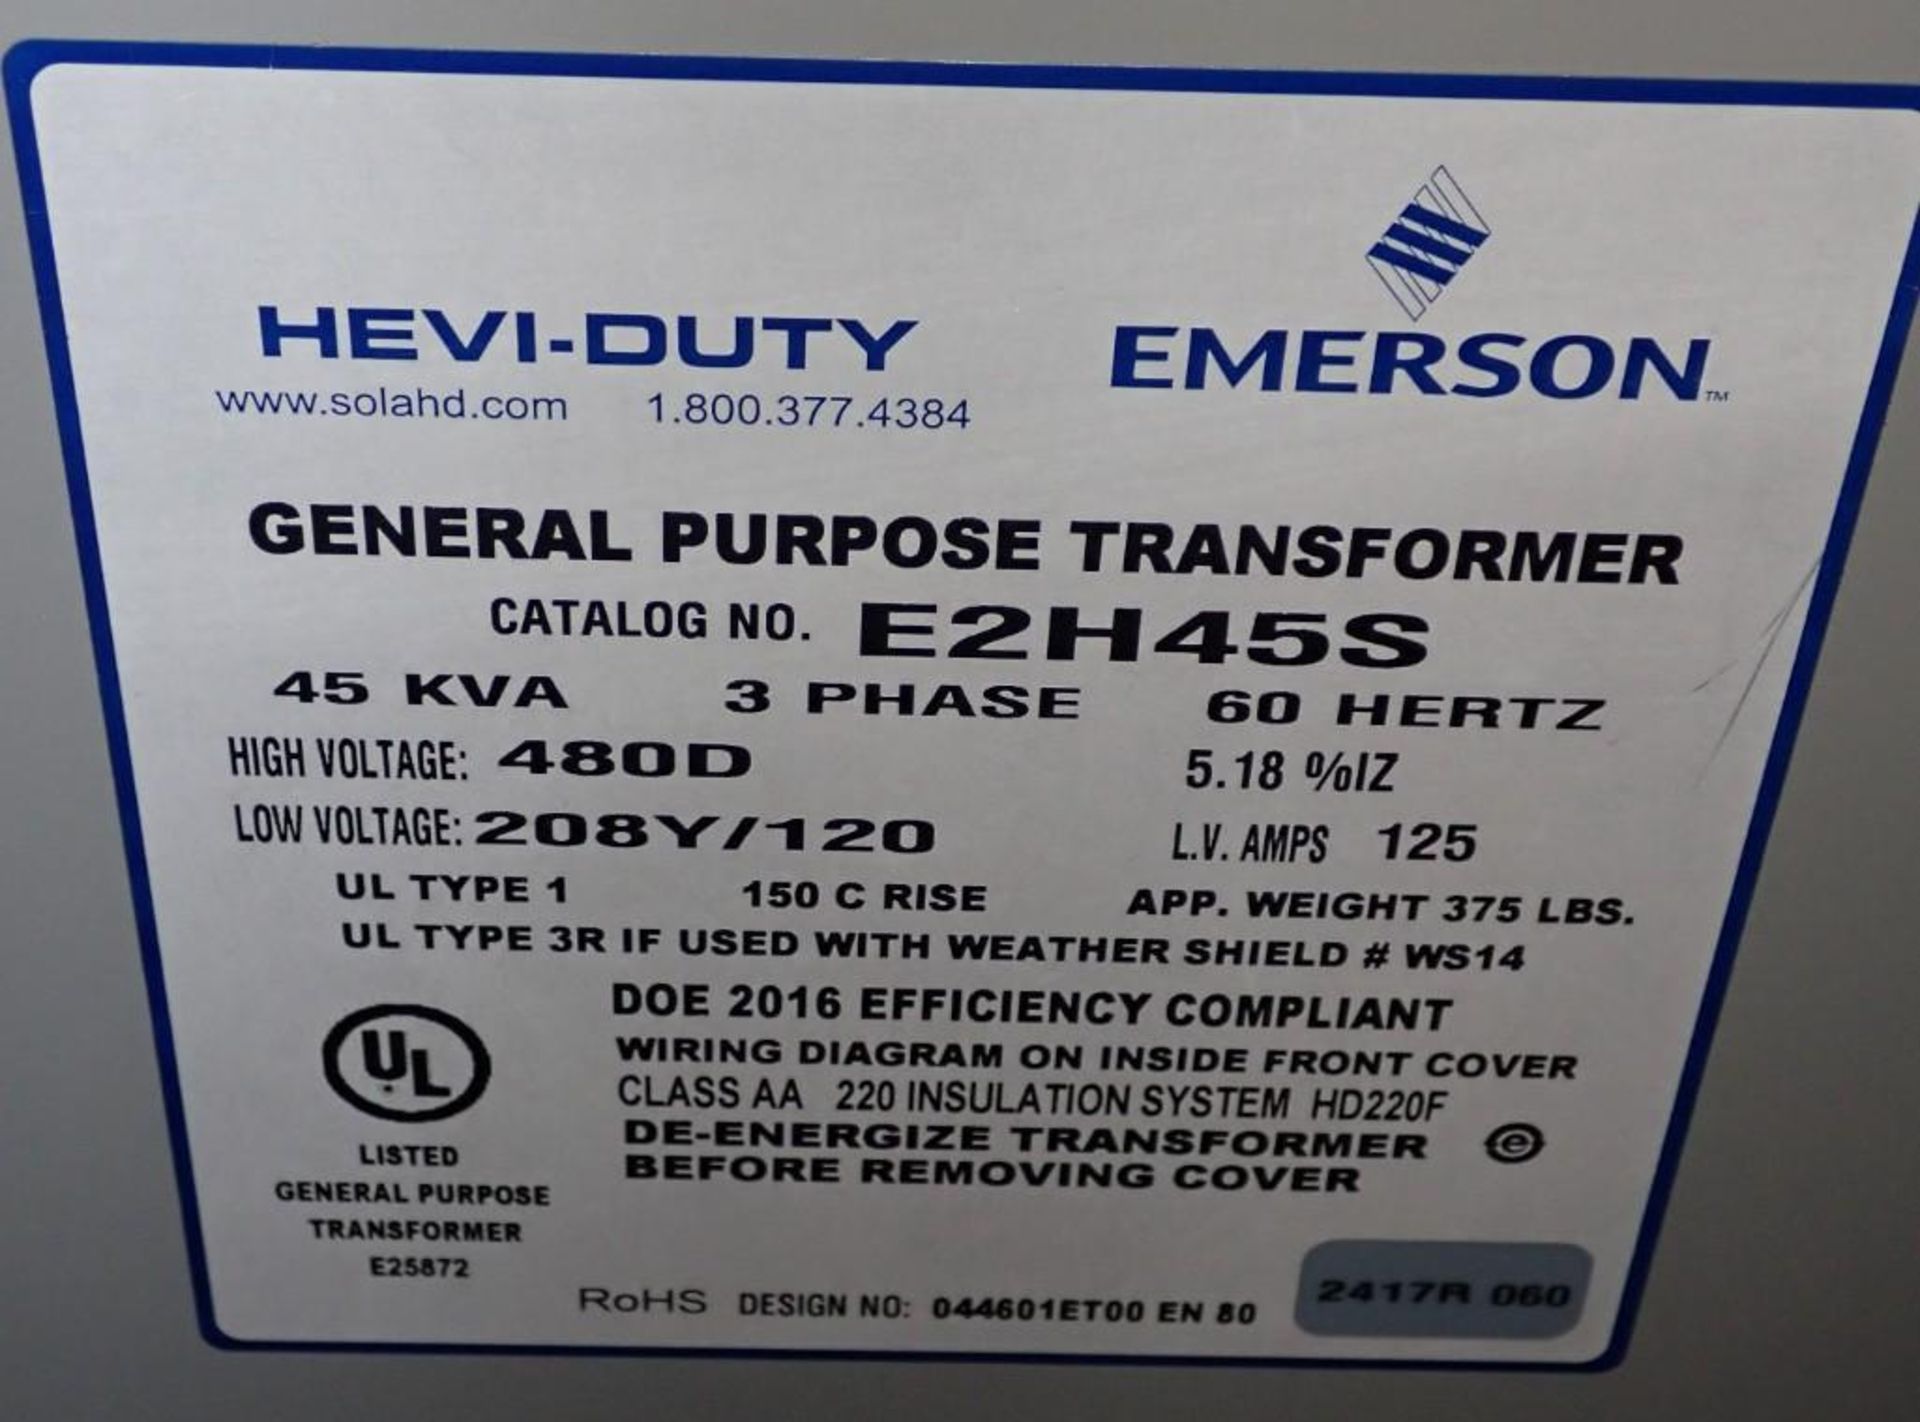 45 KVA Emerson #E2H45S Transformer - Image 4 of 4